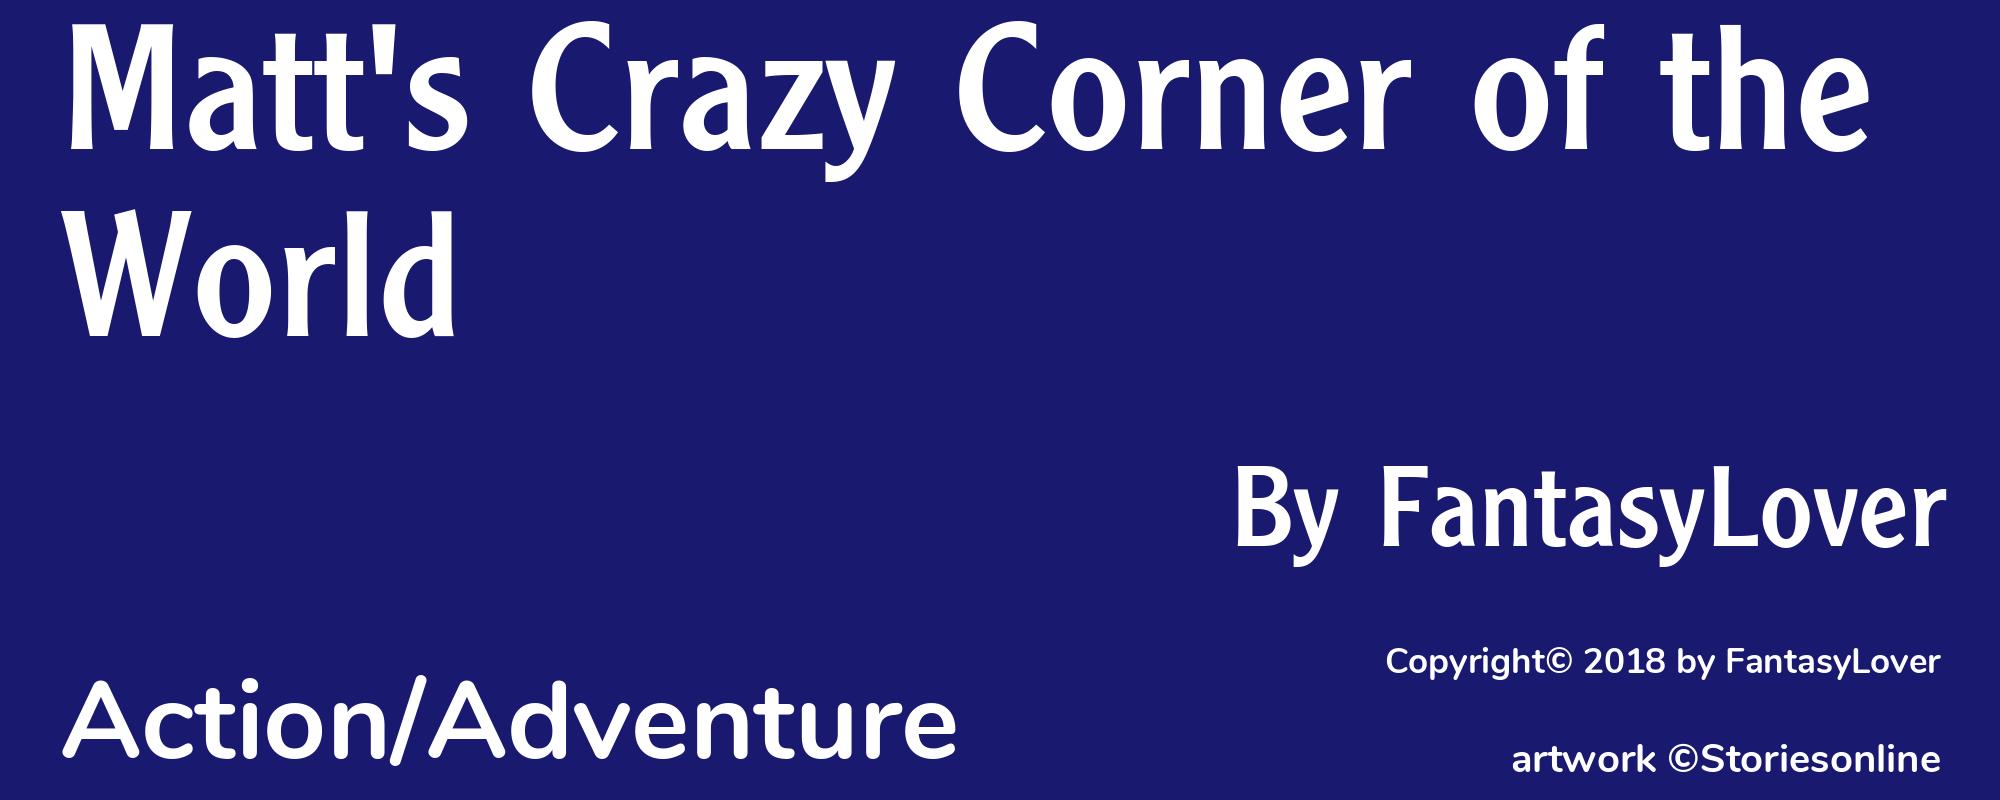 Matt's Crazy Corner of the World - Cover